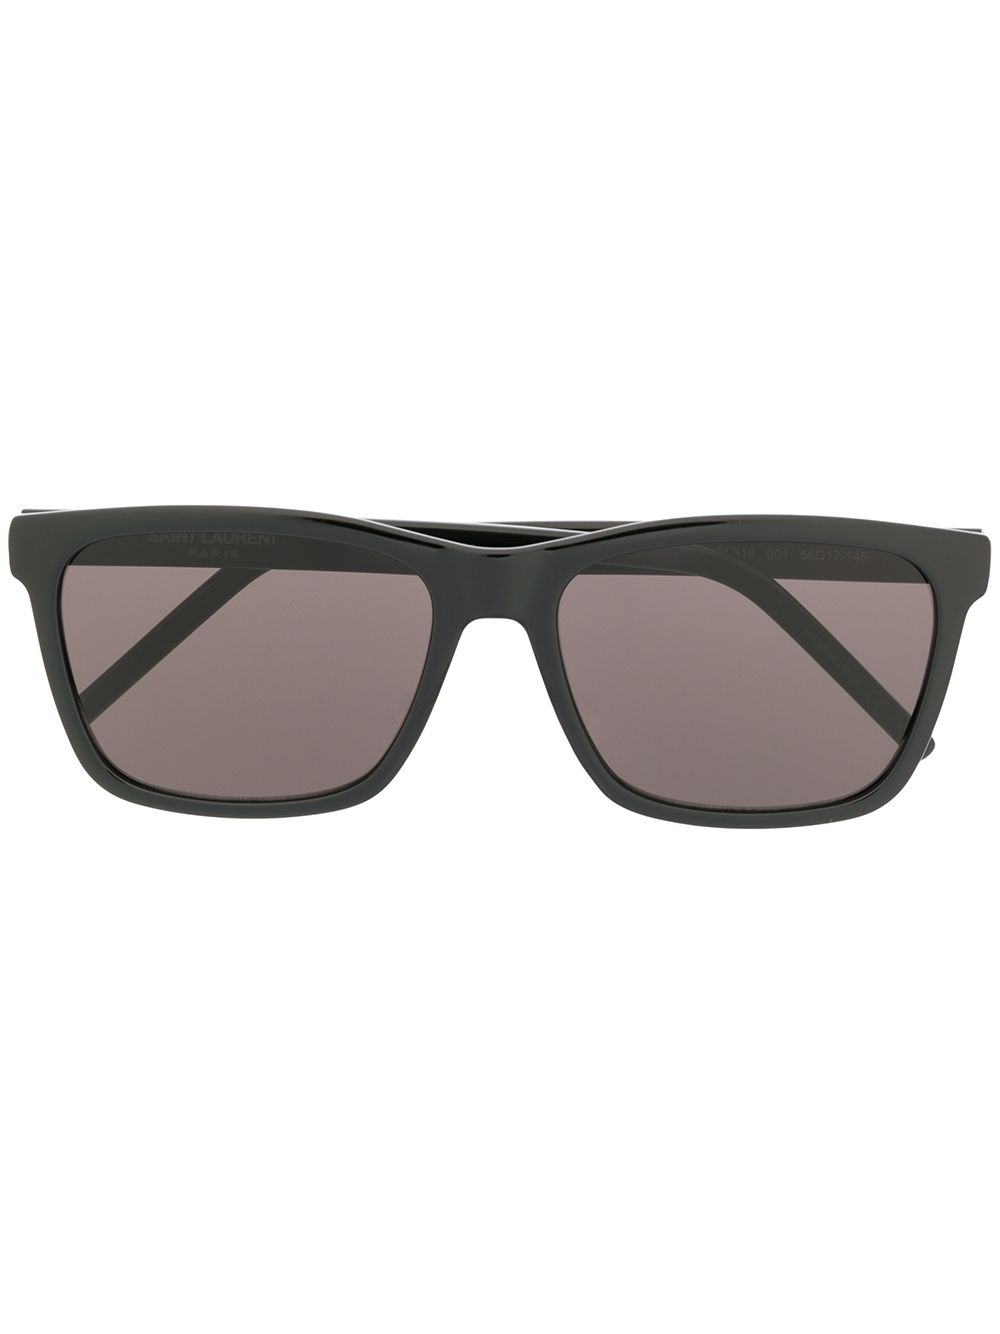 Saint Laurent Eyewear square frame sunglasses - Black von Saint Laurent Eyewear